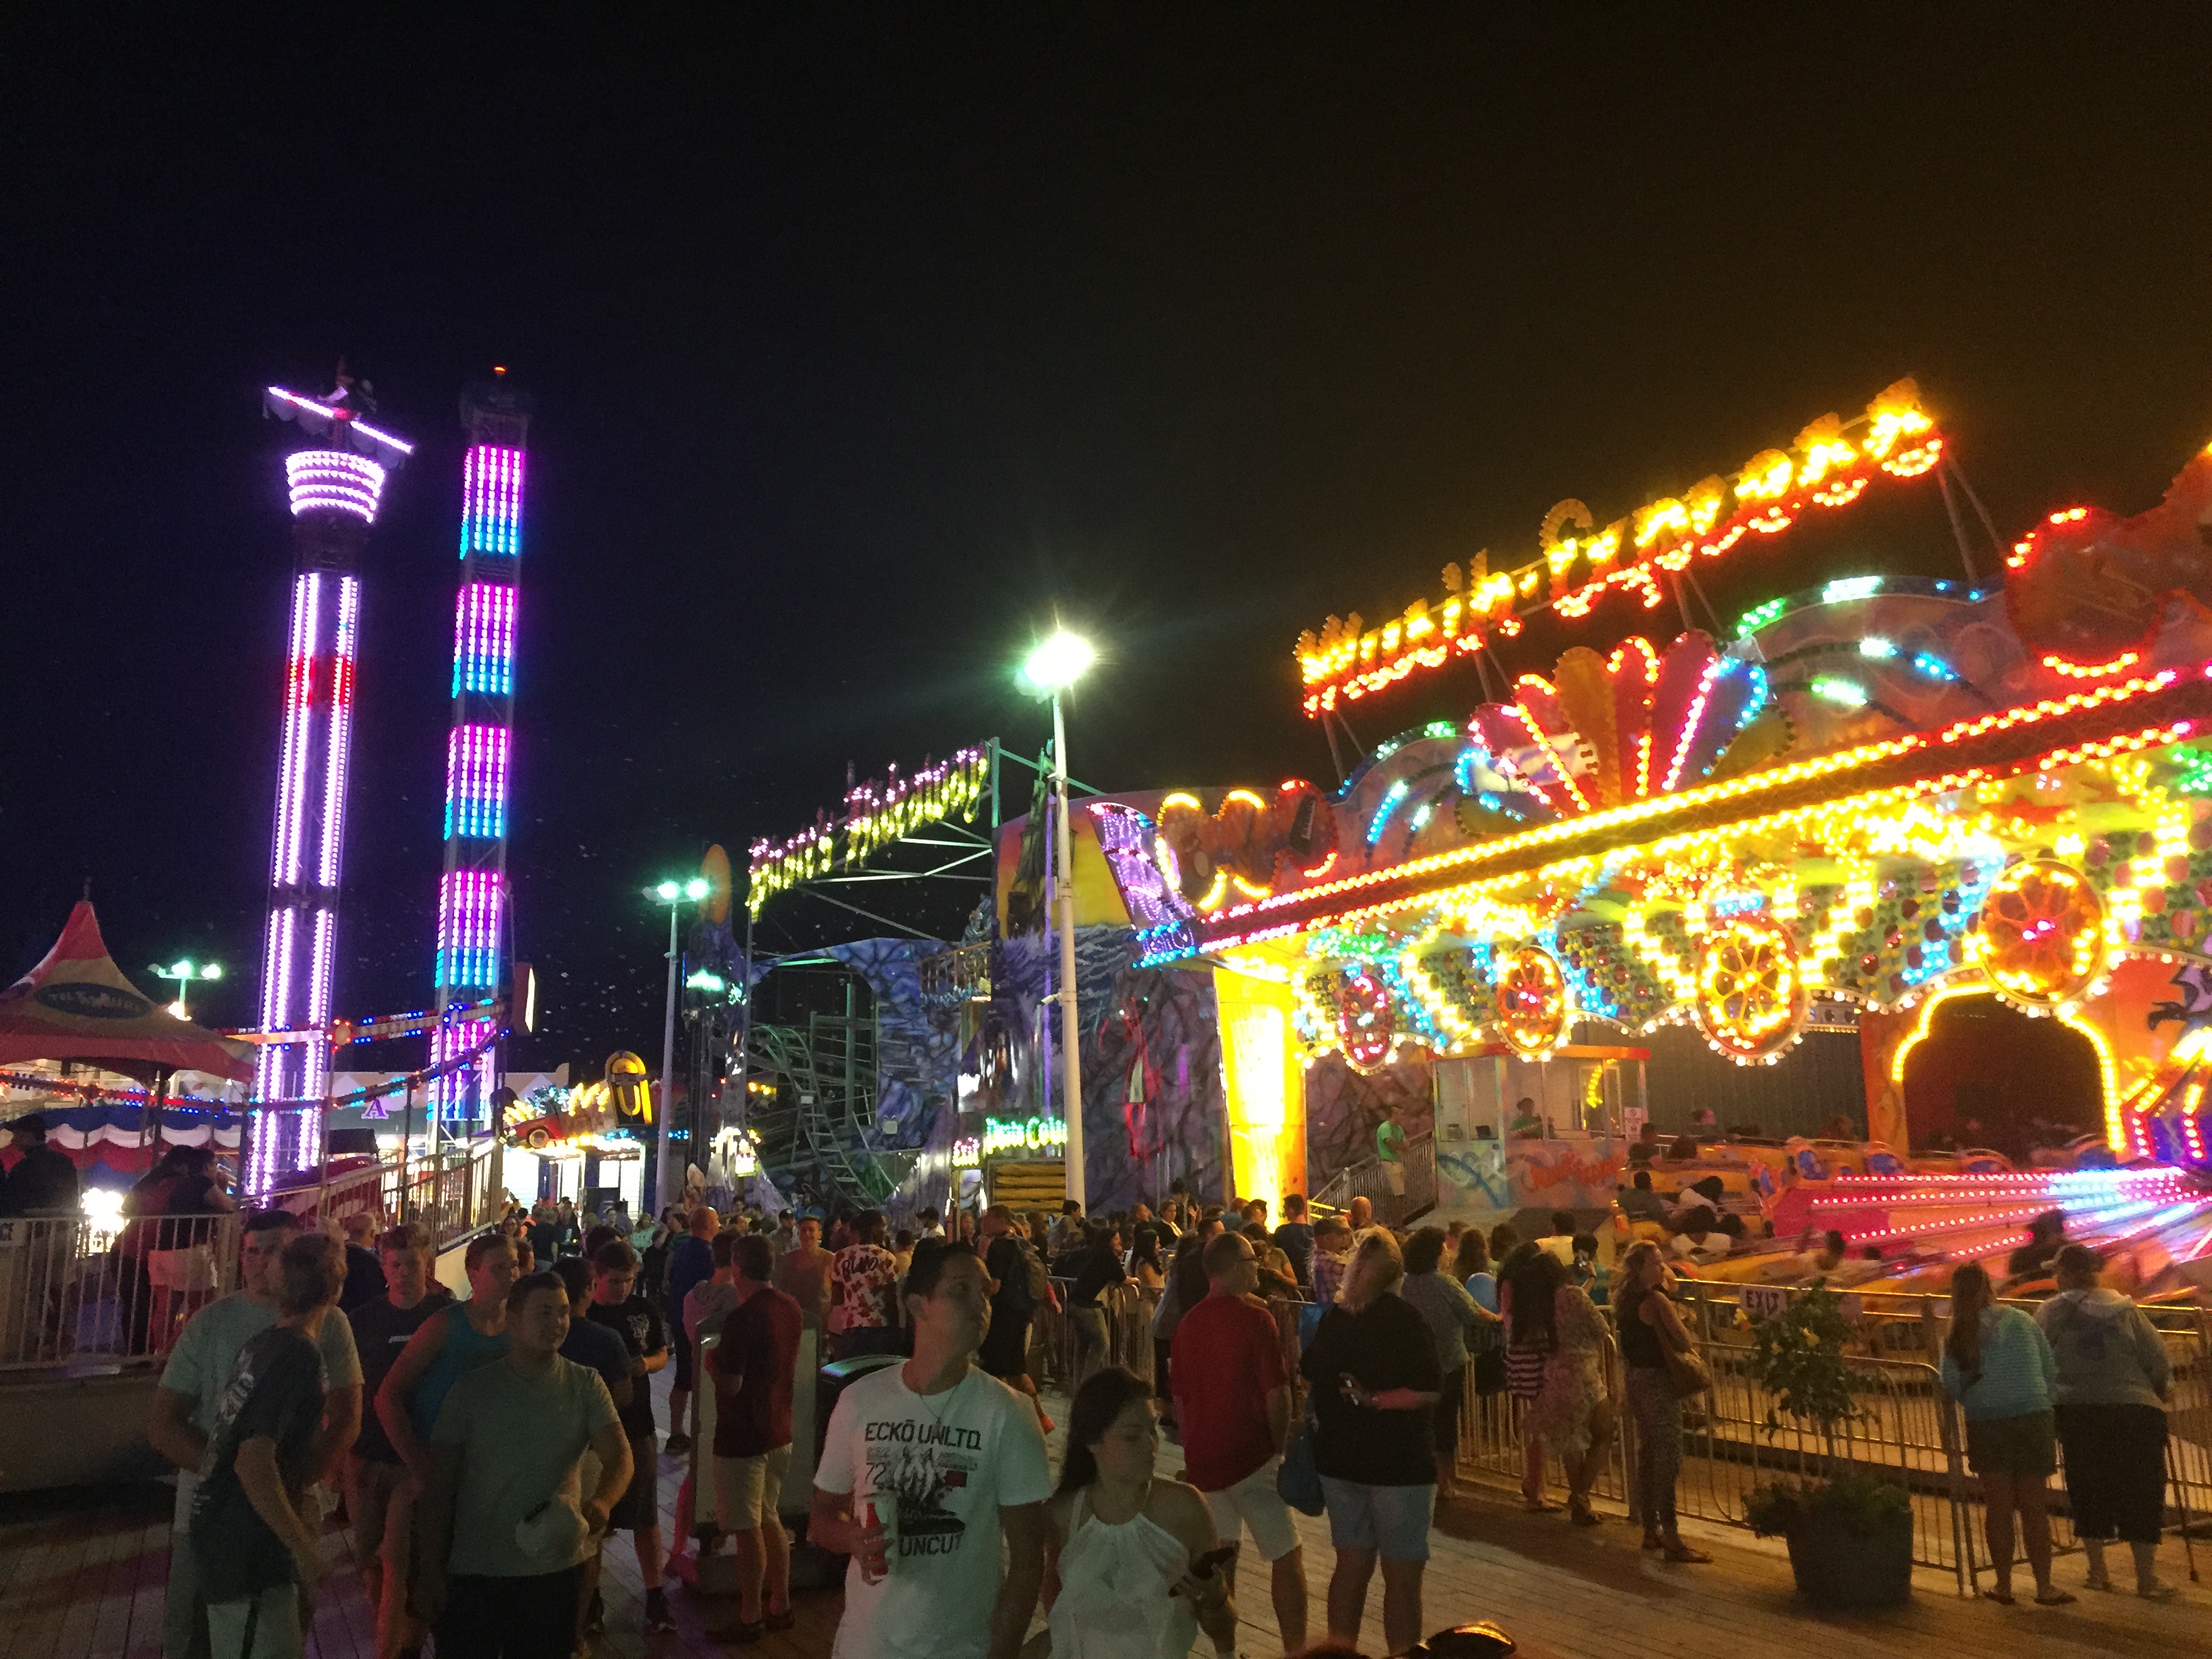 Attractions at Casino Pier, Summer 2015. (Photo: Daniel Nee)